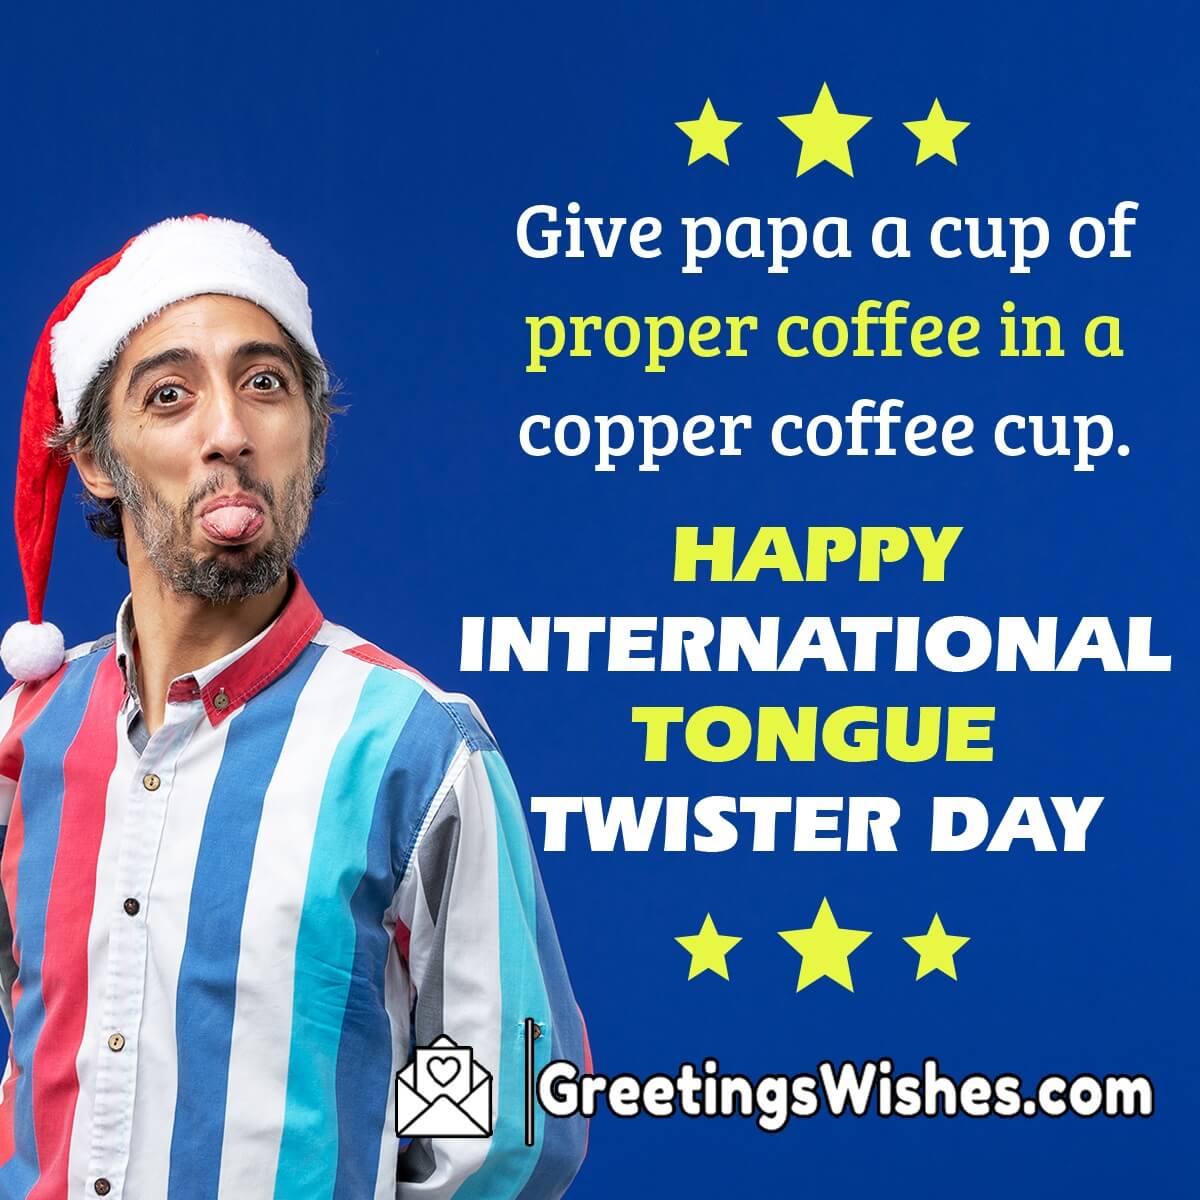 Happy International Tongue Twister Day Image